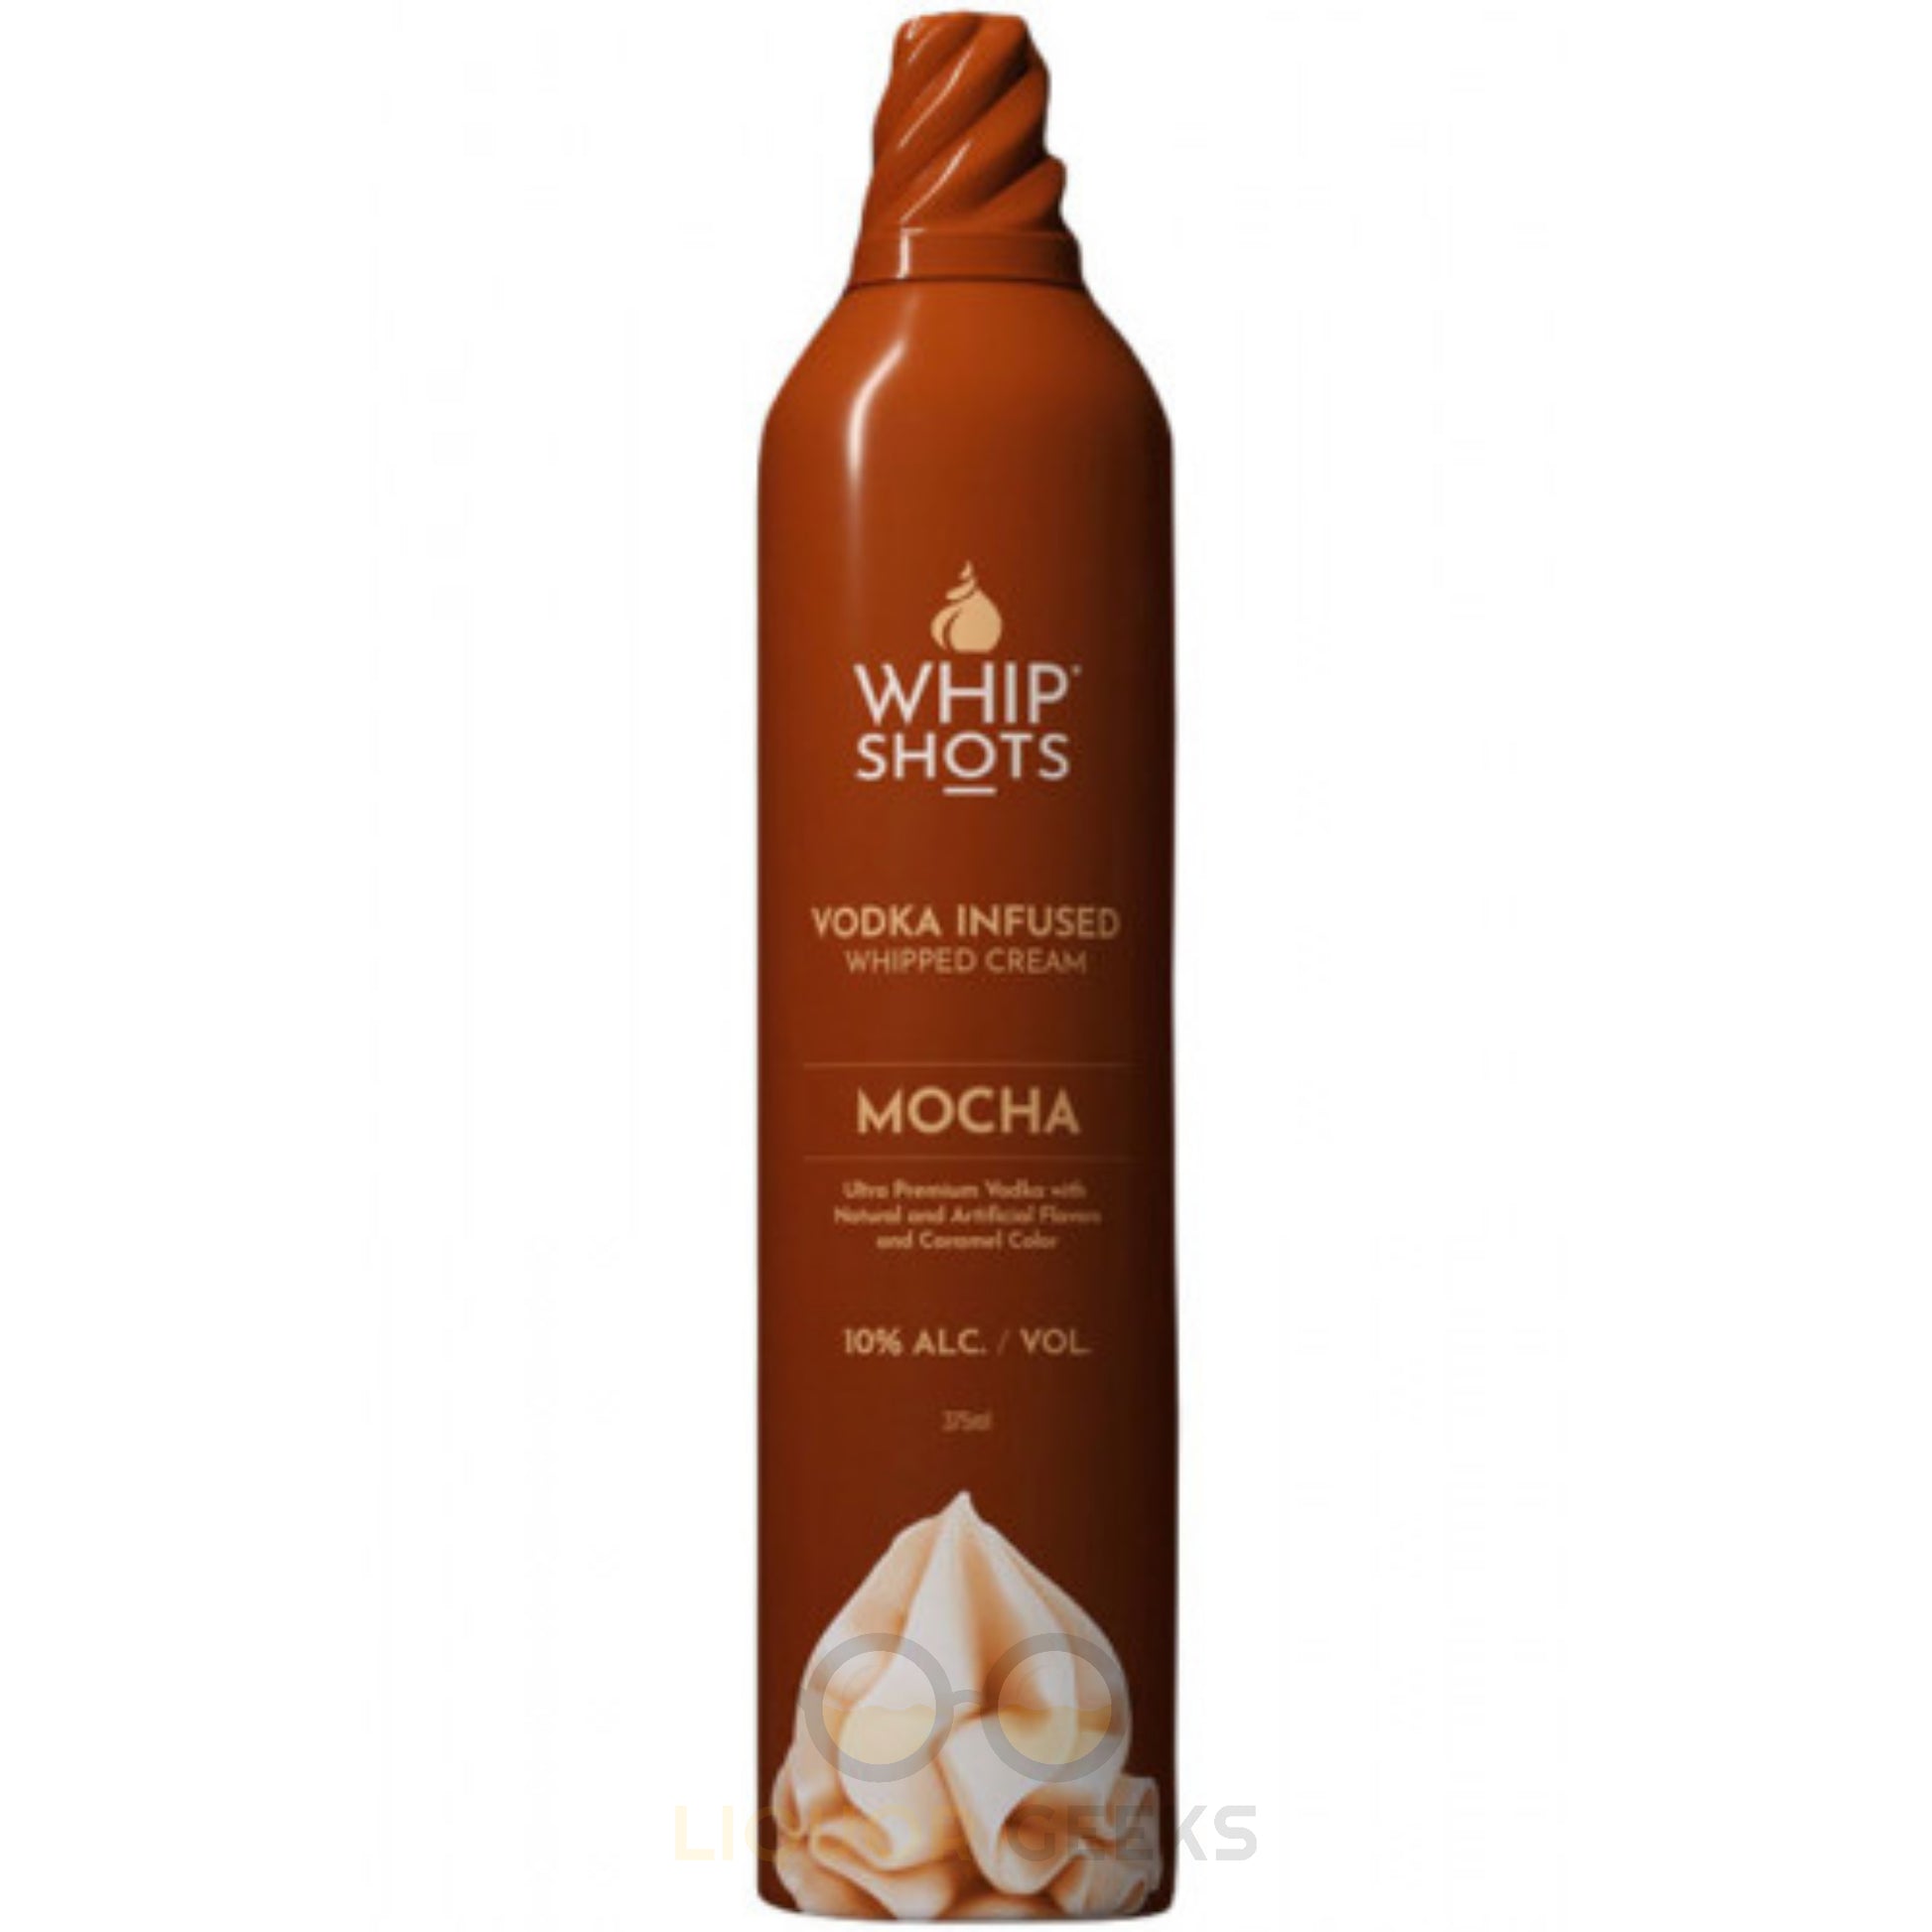 Whipshots Mocha Vodka Infused Whipped Cream - Liquor Geeks